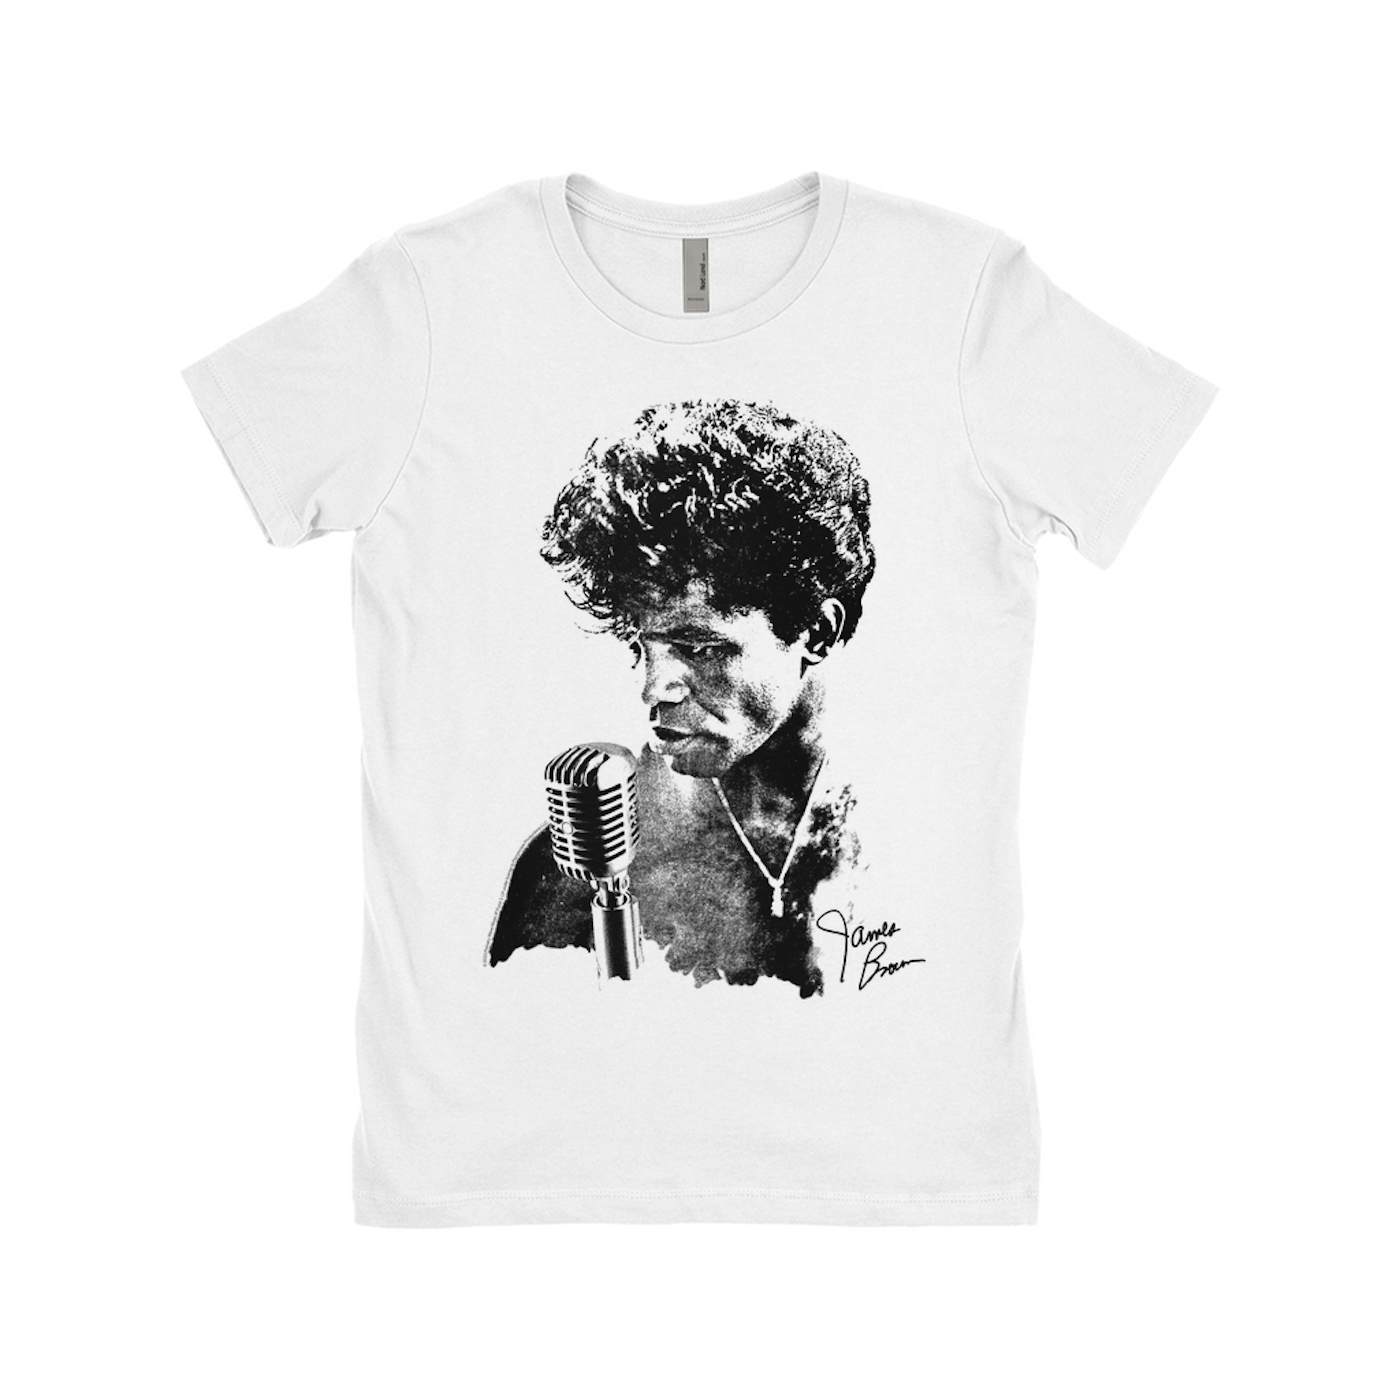 James Brown Ladies' Boyfriend T-Shirt | Grainy Black White Photo With Signature James Brown Shirt